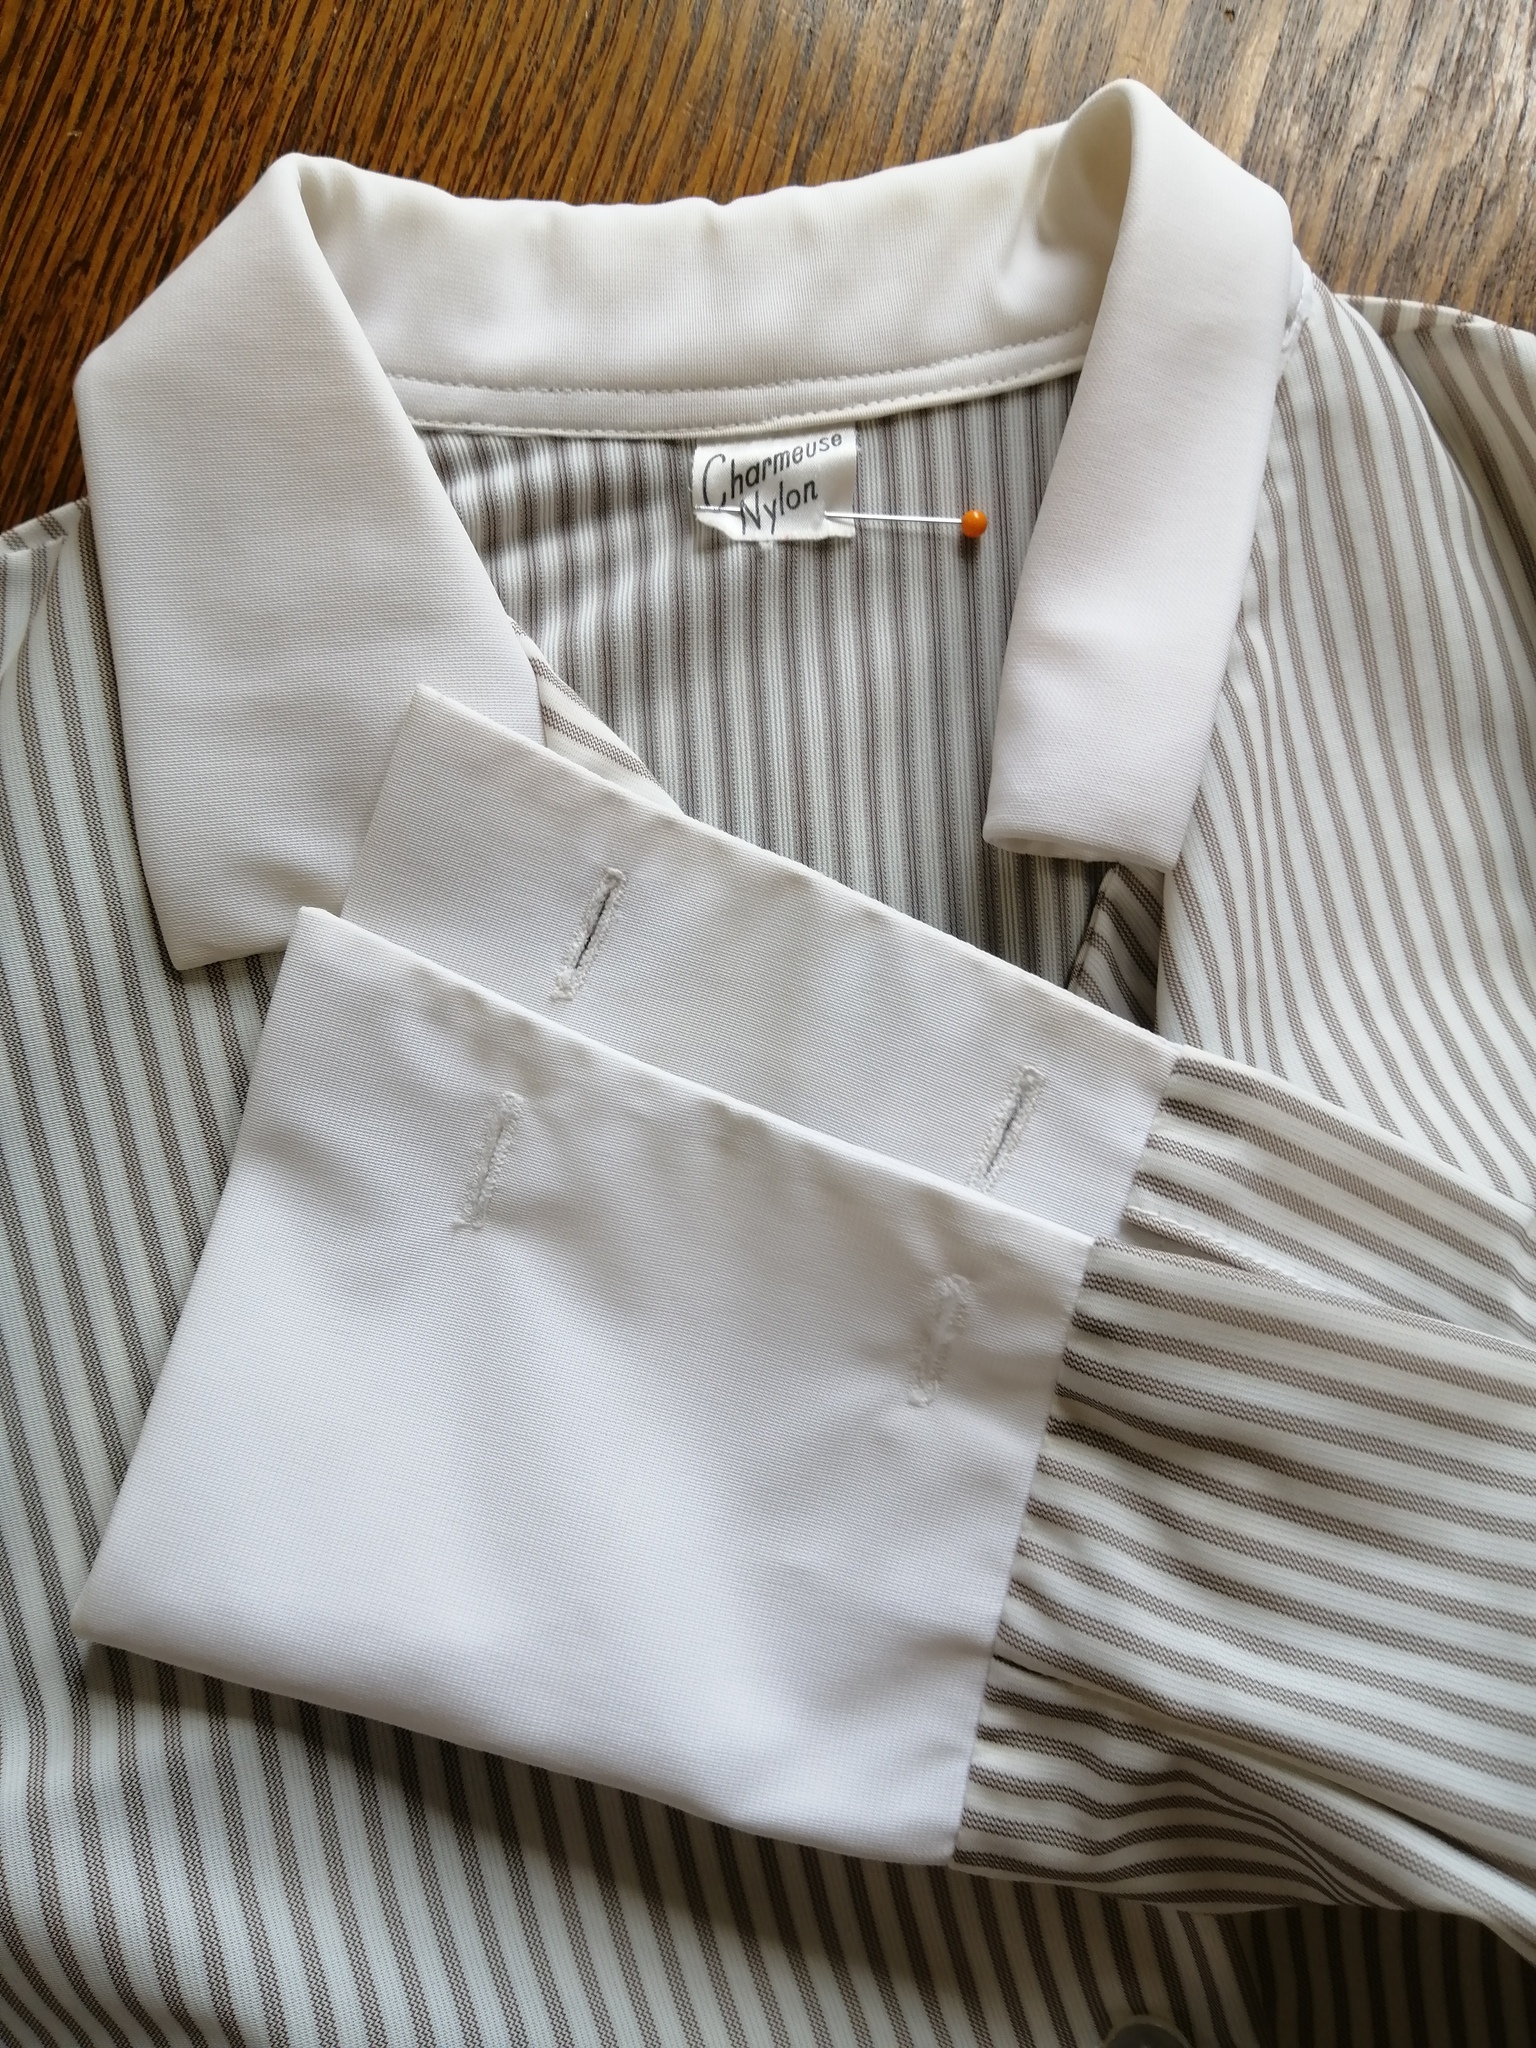 Vintage nylon-skjorta blus dam svagt brun-randig vit krage manschetter 50-tal